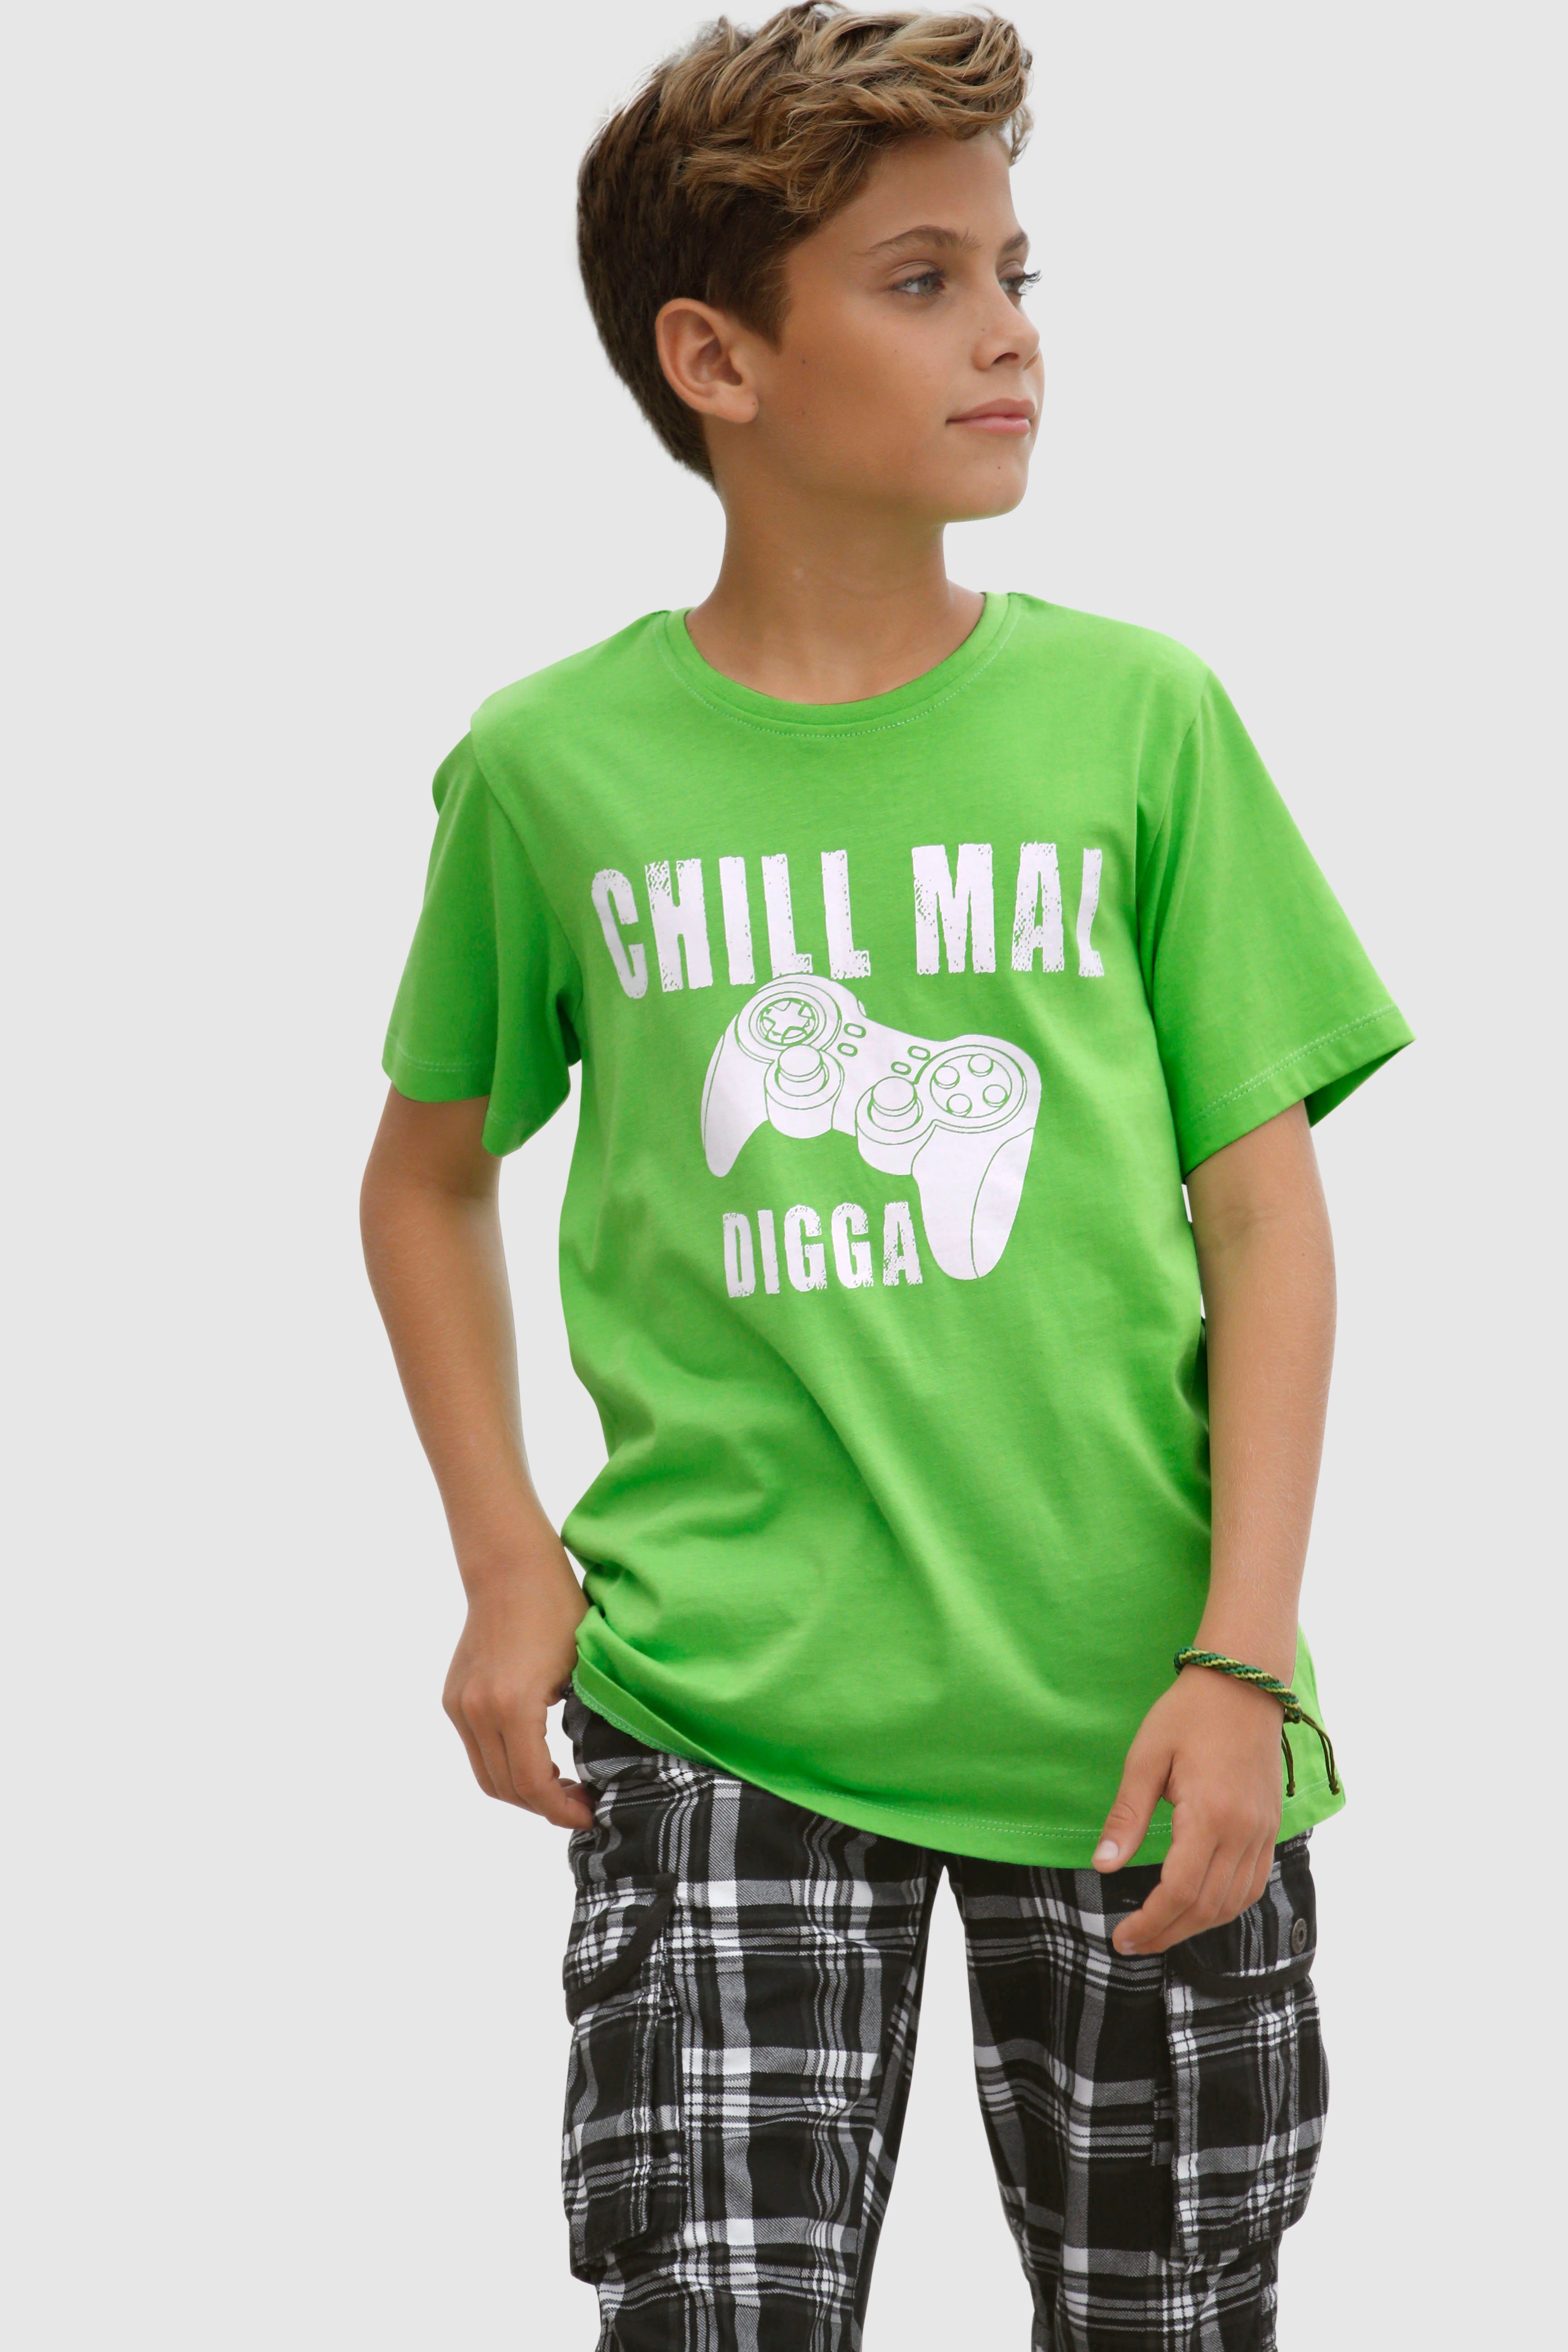 KIDSWORLD T-Shirt MAL, CHILL Spruch